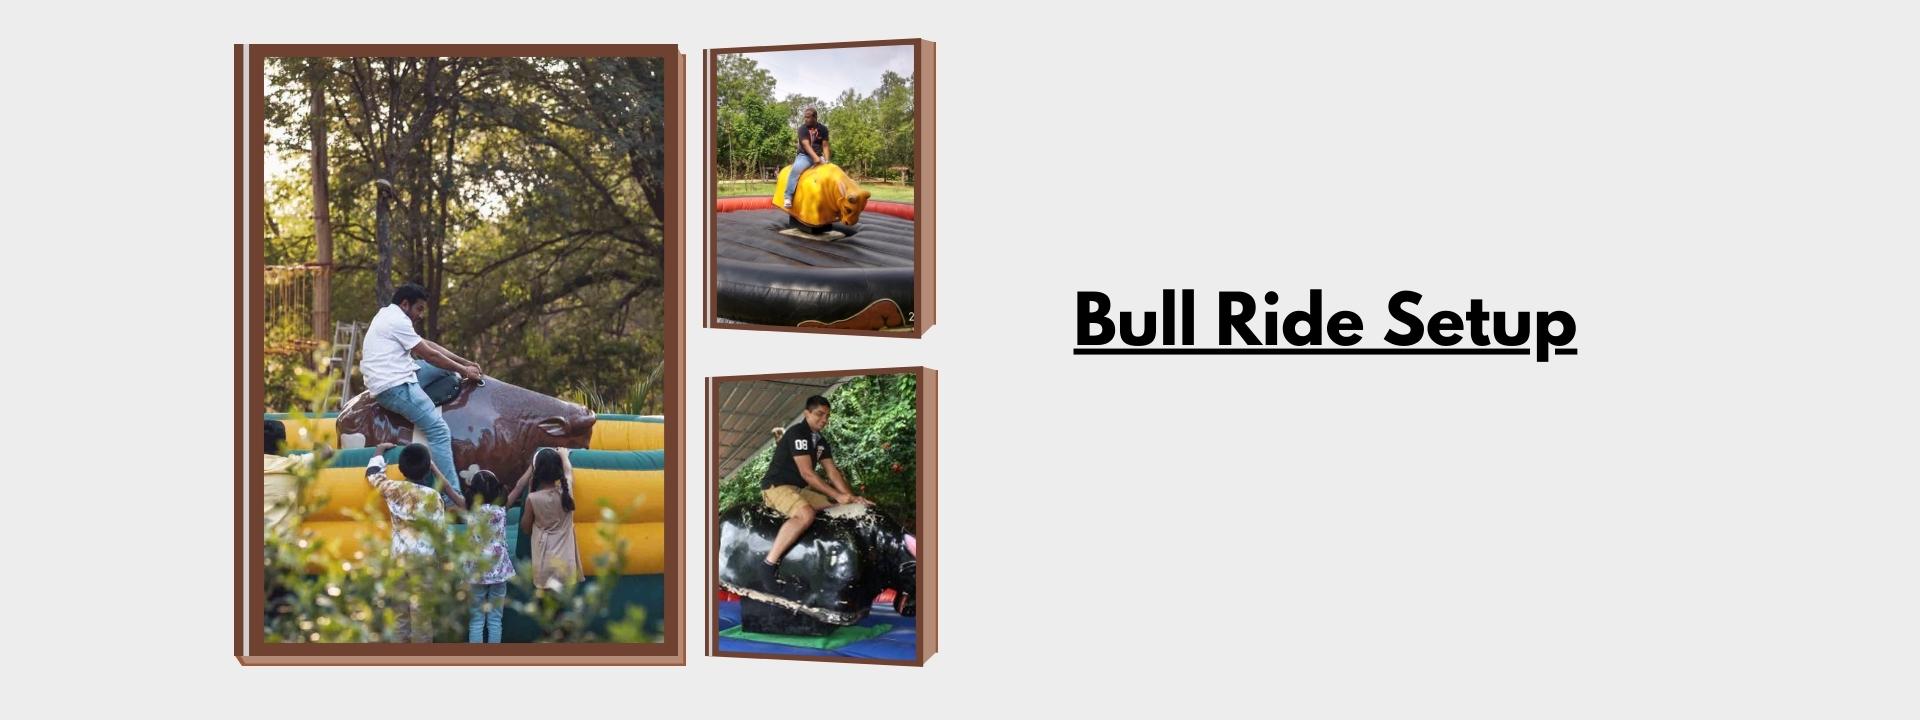 Mechanical Bull setup | Bull Riding Activity Setup